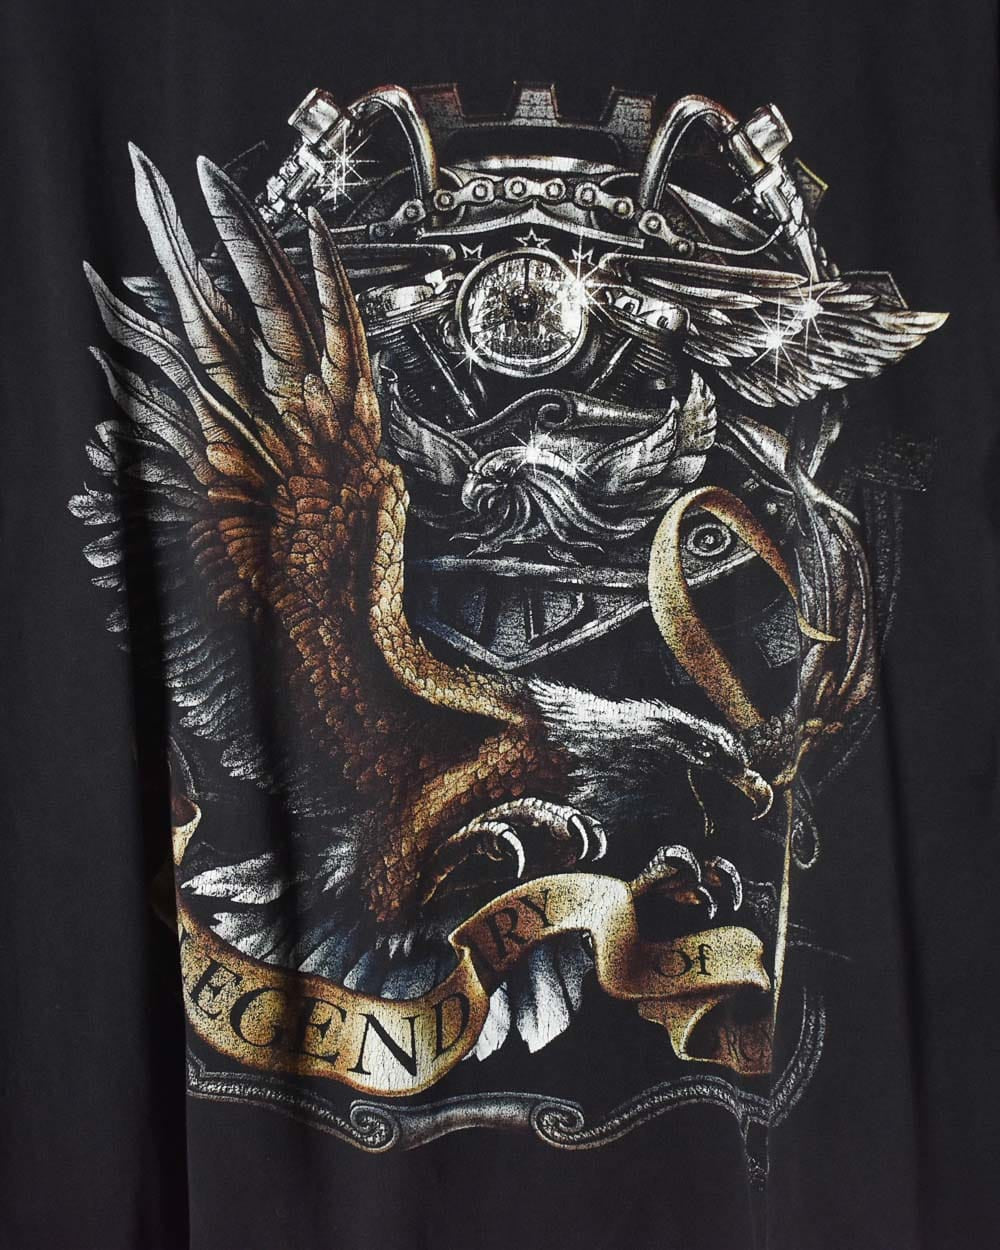 Black Rock Chang Legendary Eagle Graphic T-Shirt - X-Large